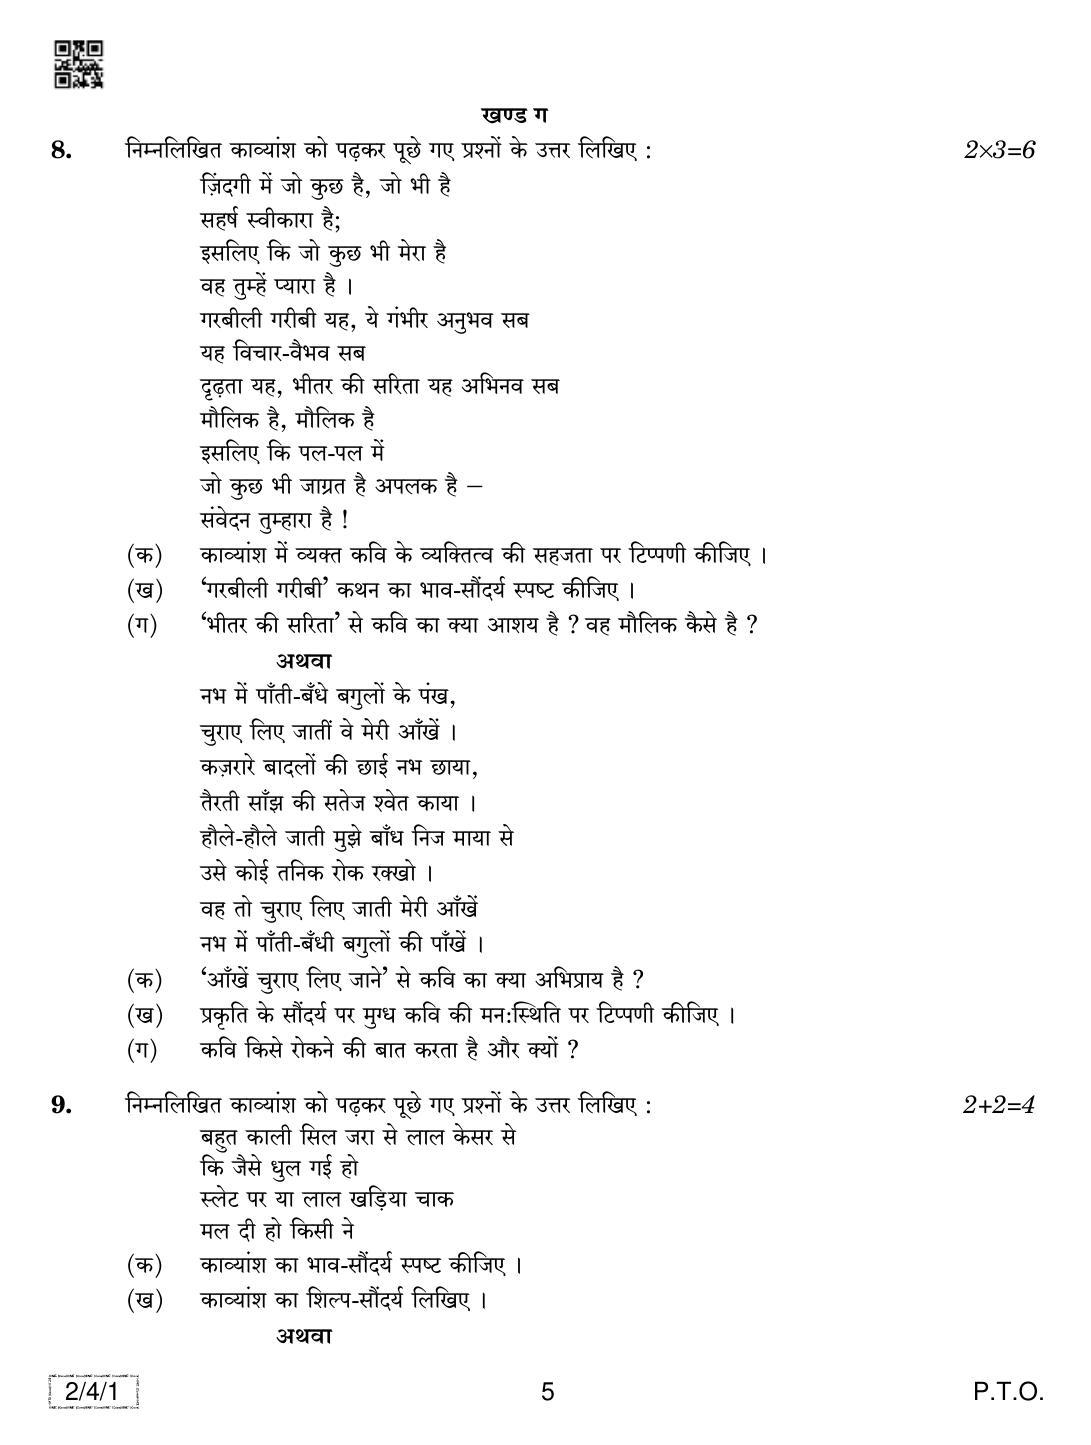 CBSE Class 12 2-4-1 Hindi Core 2019 Question Paper - Page 5